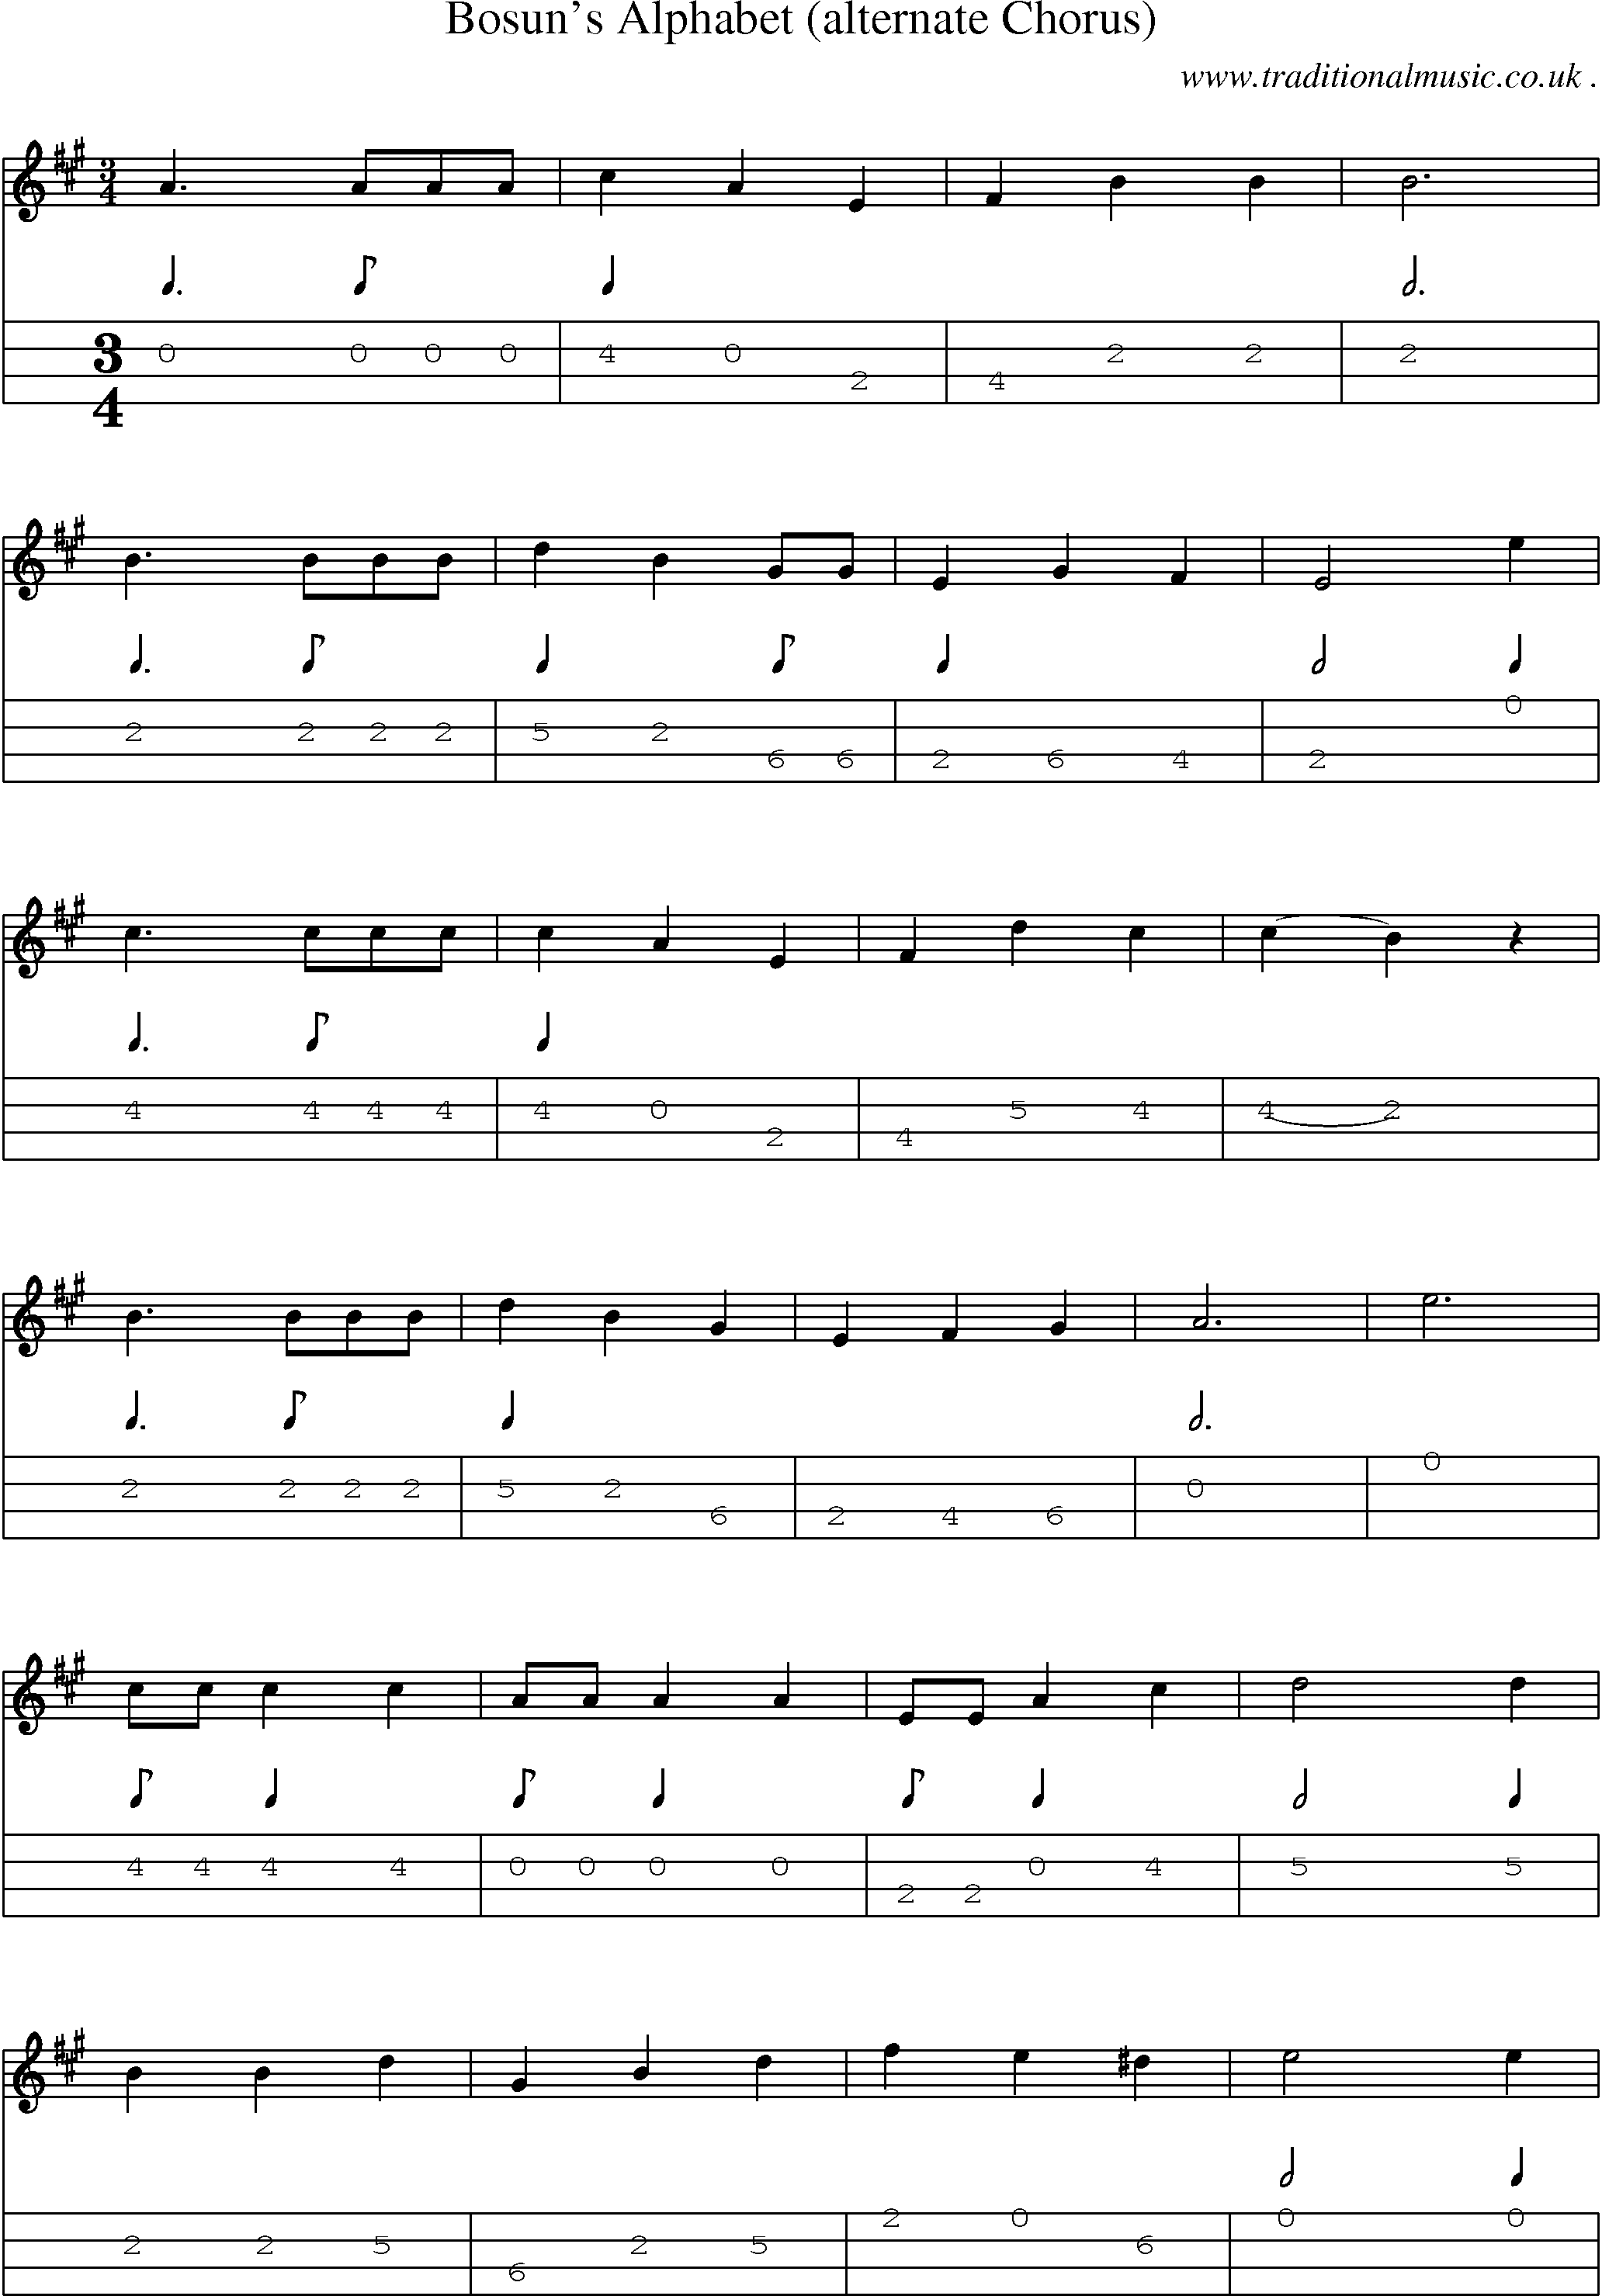 Sheet-Music and Mandolin Tabs for Bosuns Alphabet (alternate Chorus)